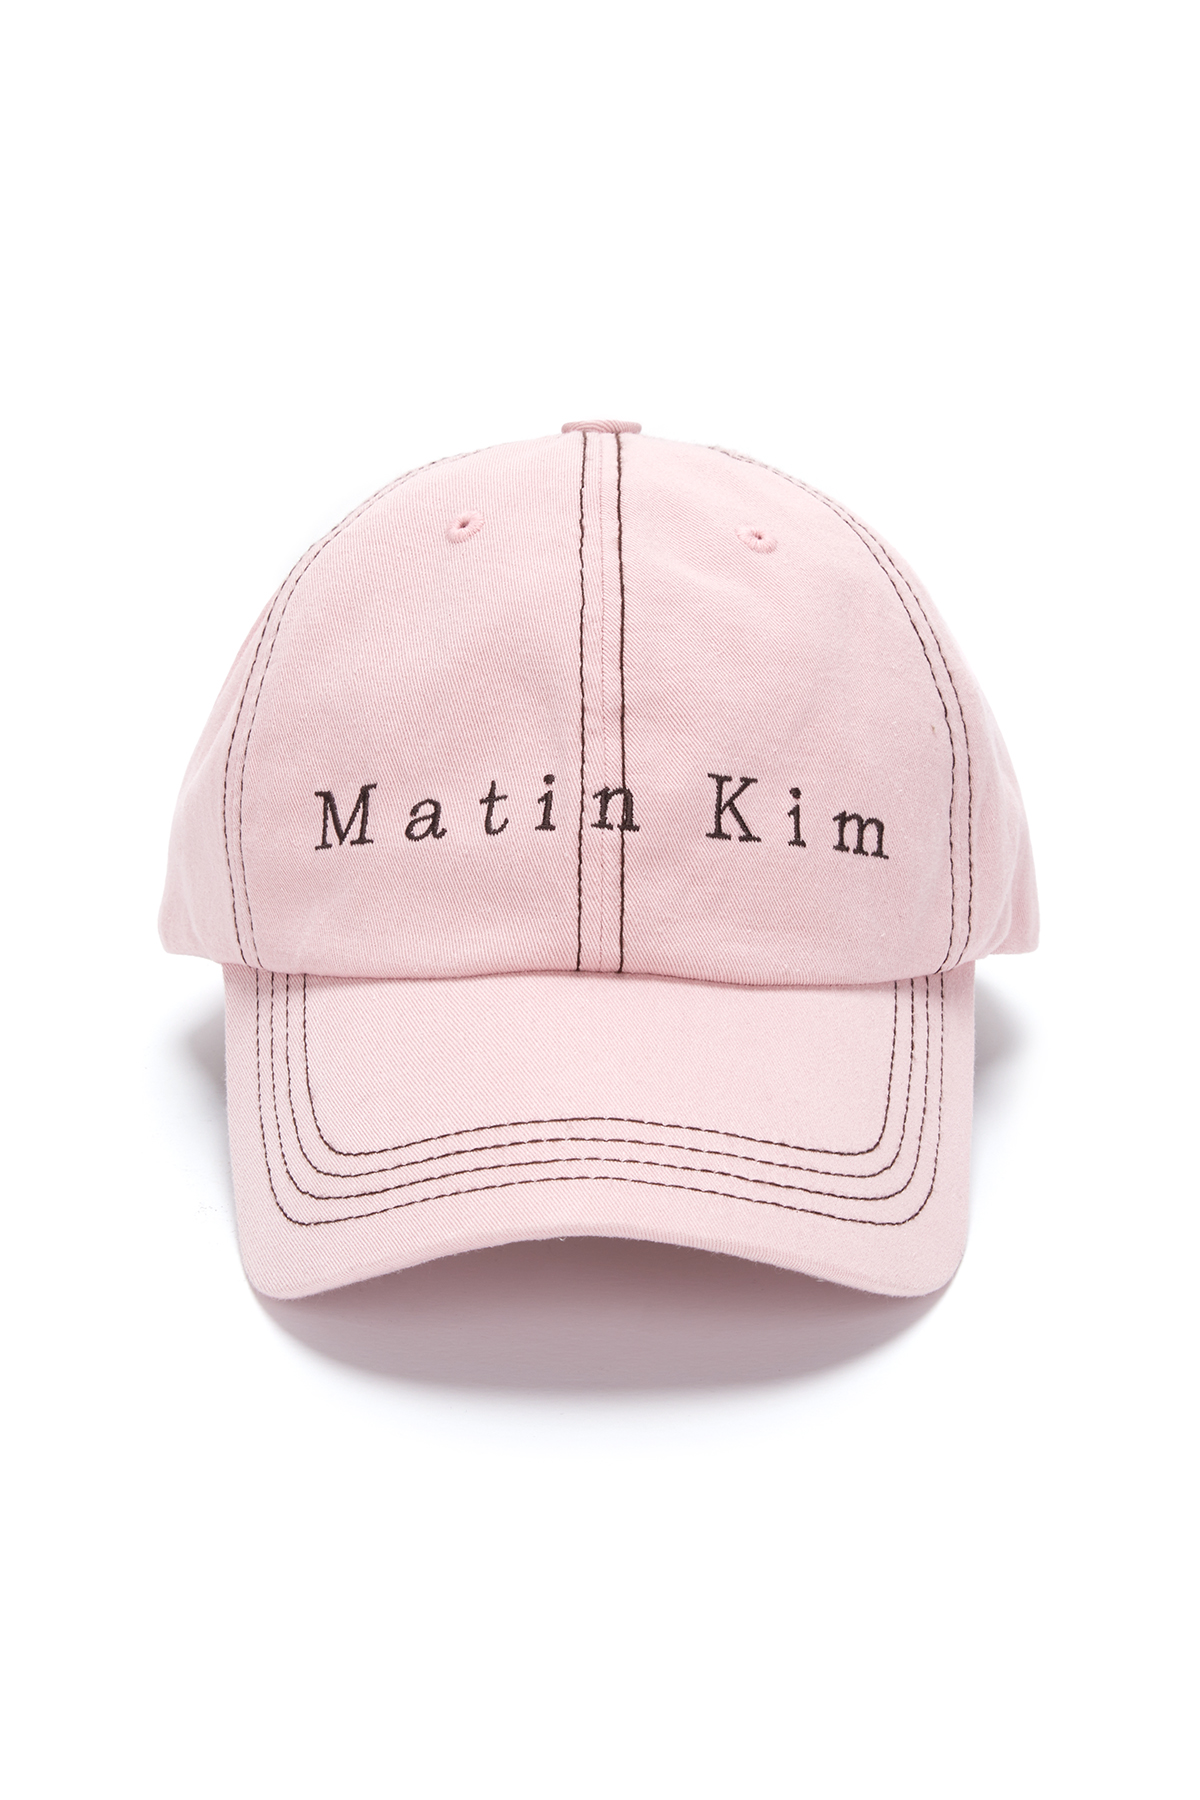 MATIN STITCH BALL CAP IN LIGHT PINK